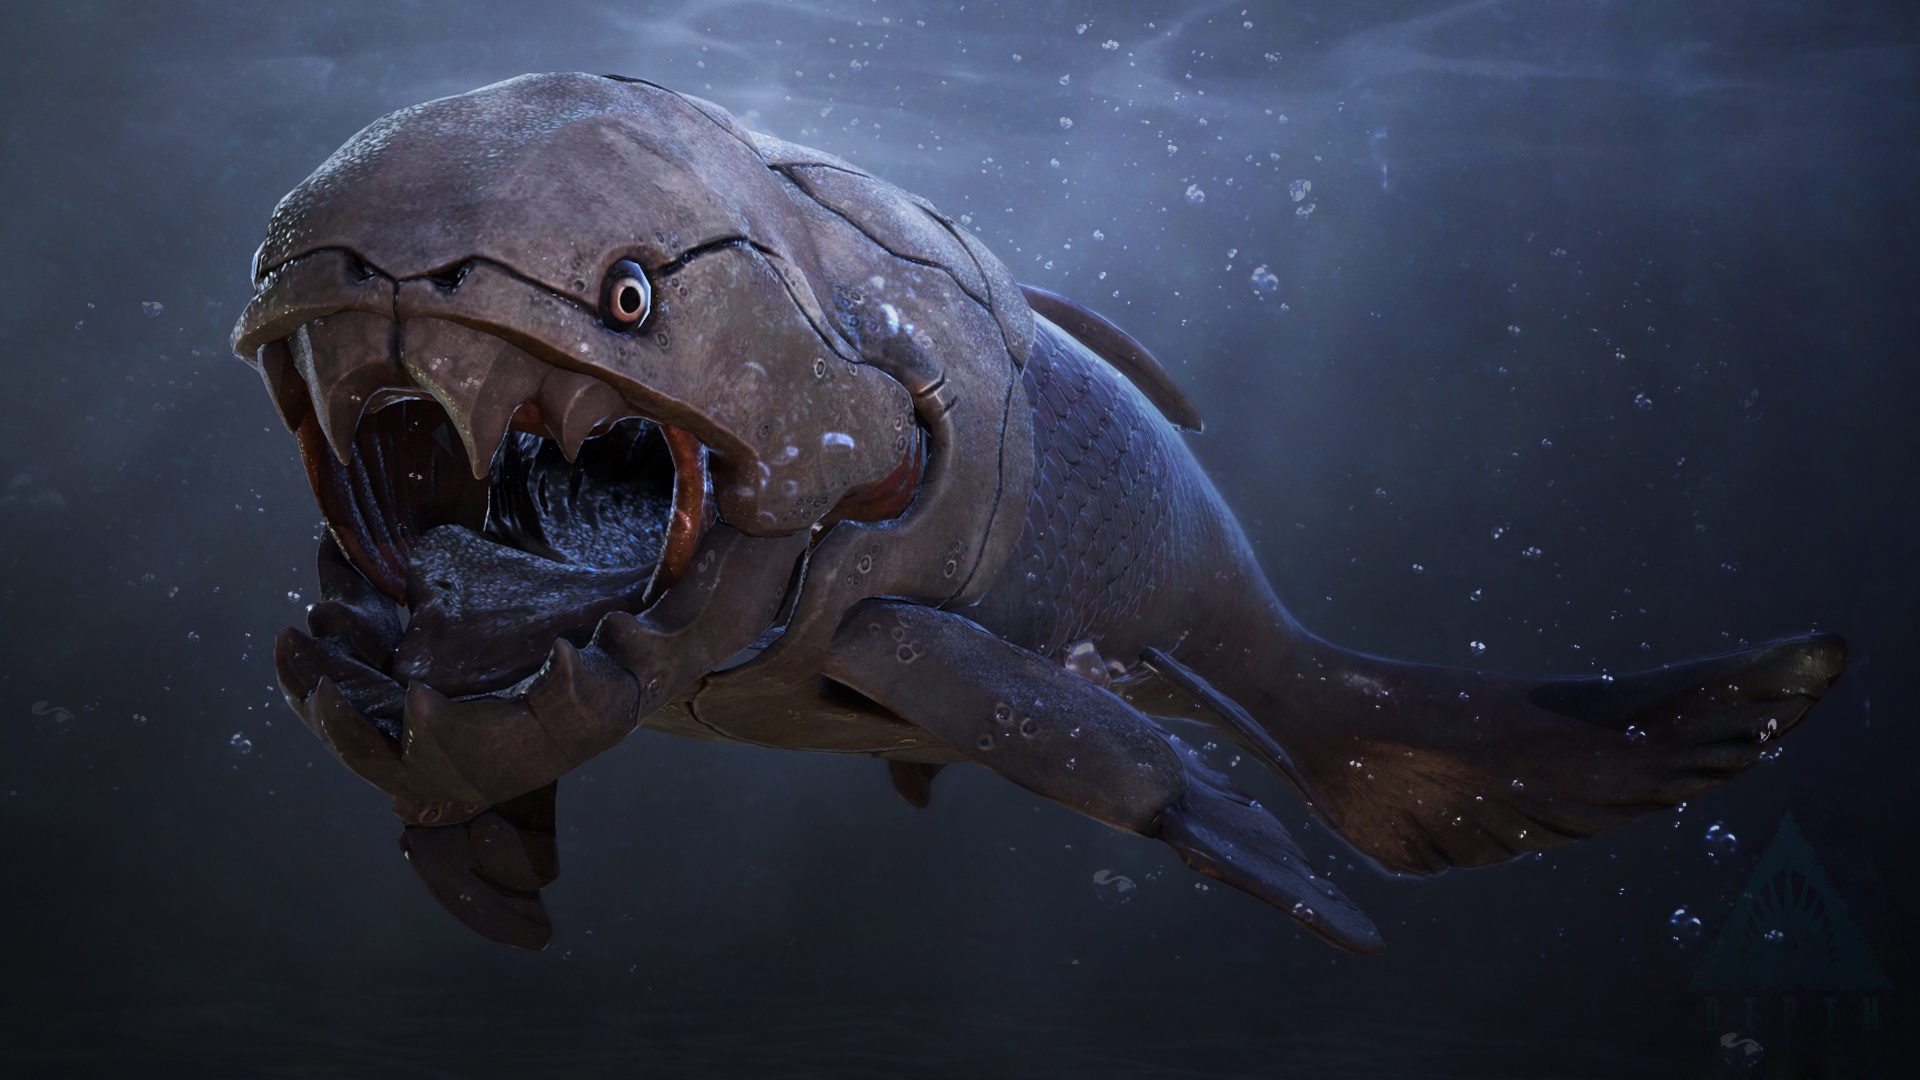 General 1920x1080 fantasy art creature underwater Dunkleosteus